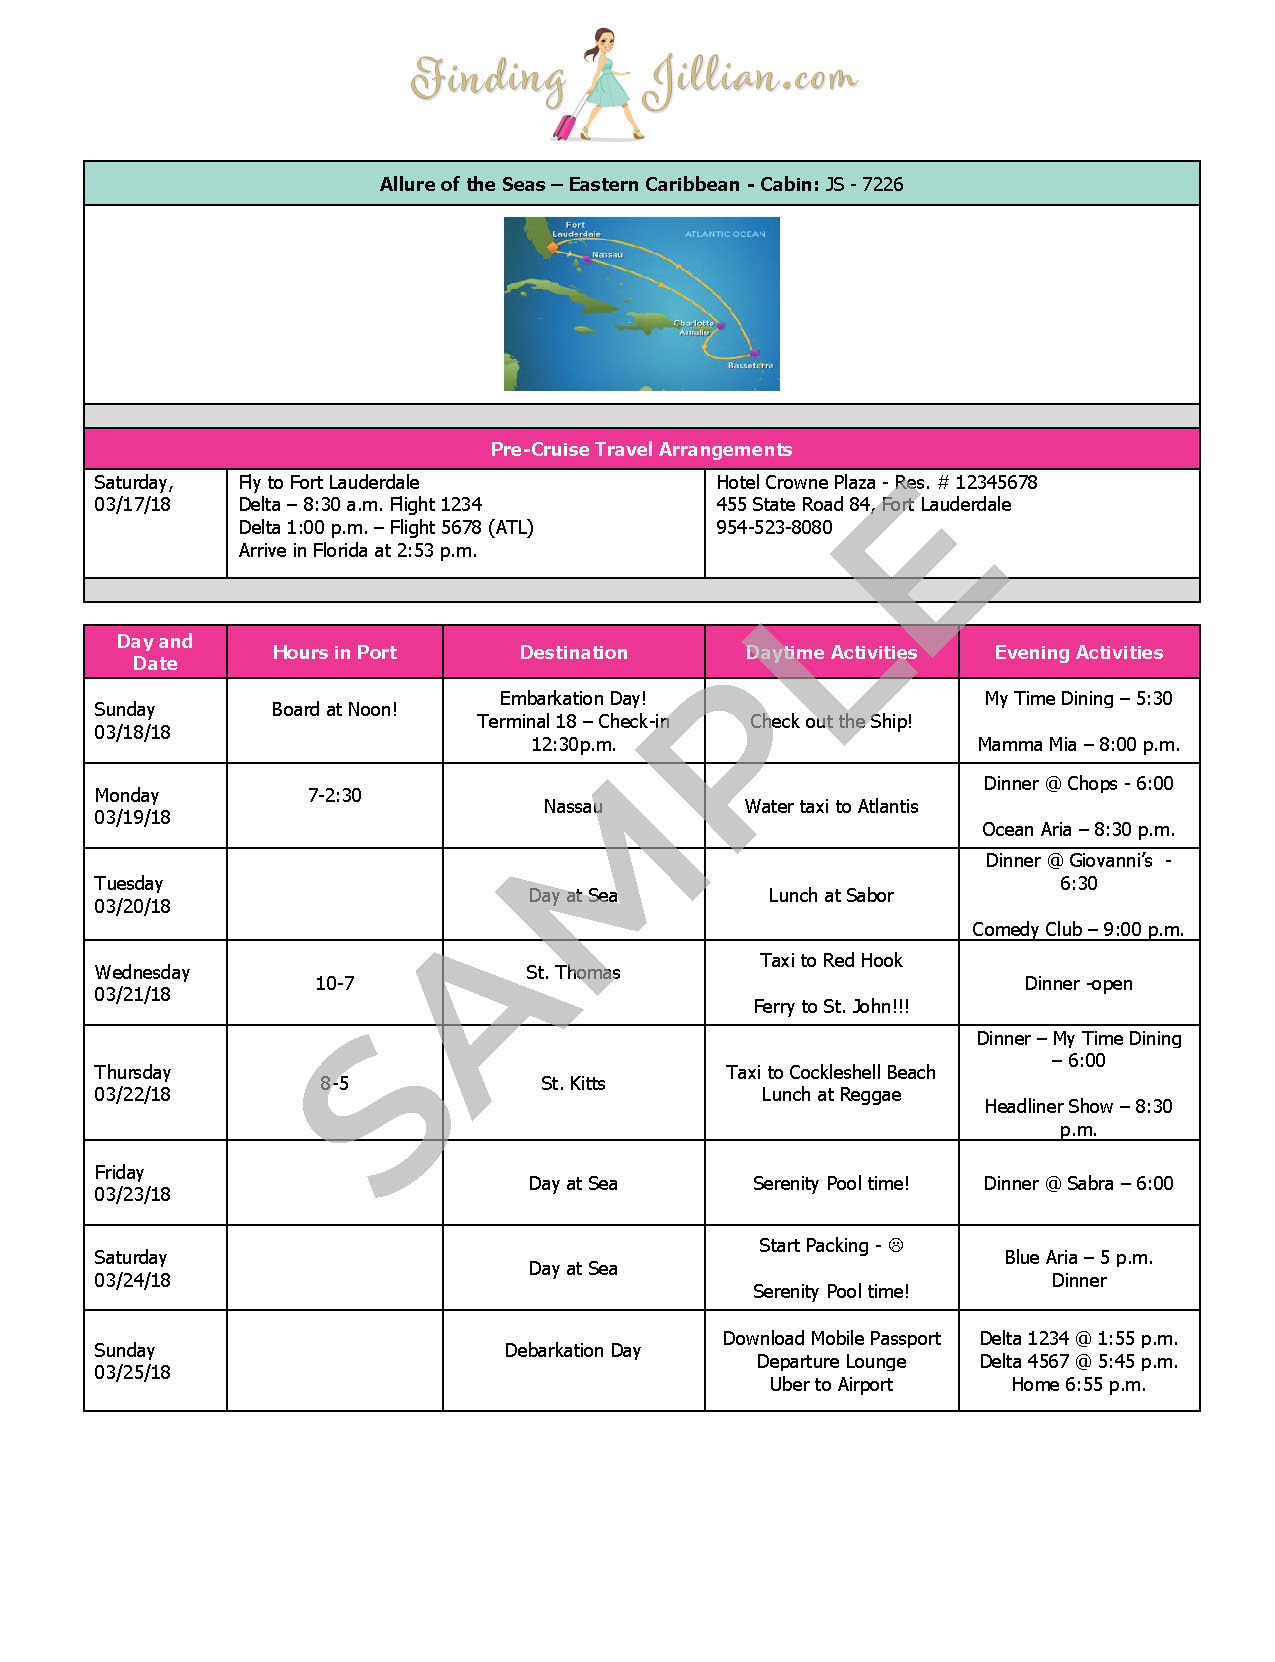 cruise itinerary for royal caribbean